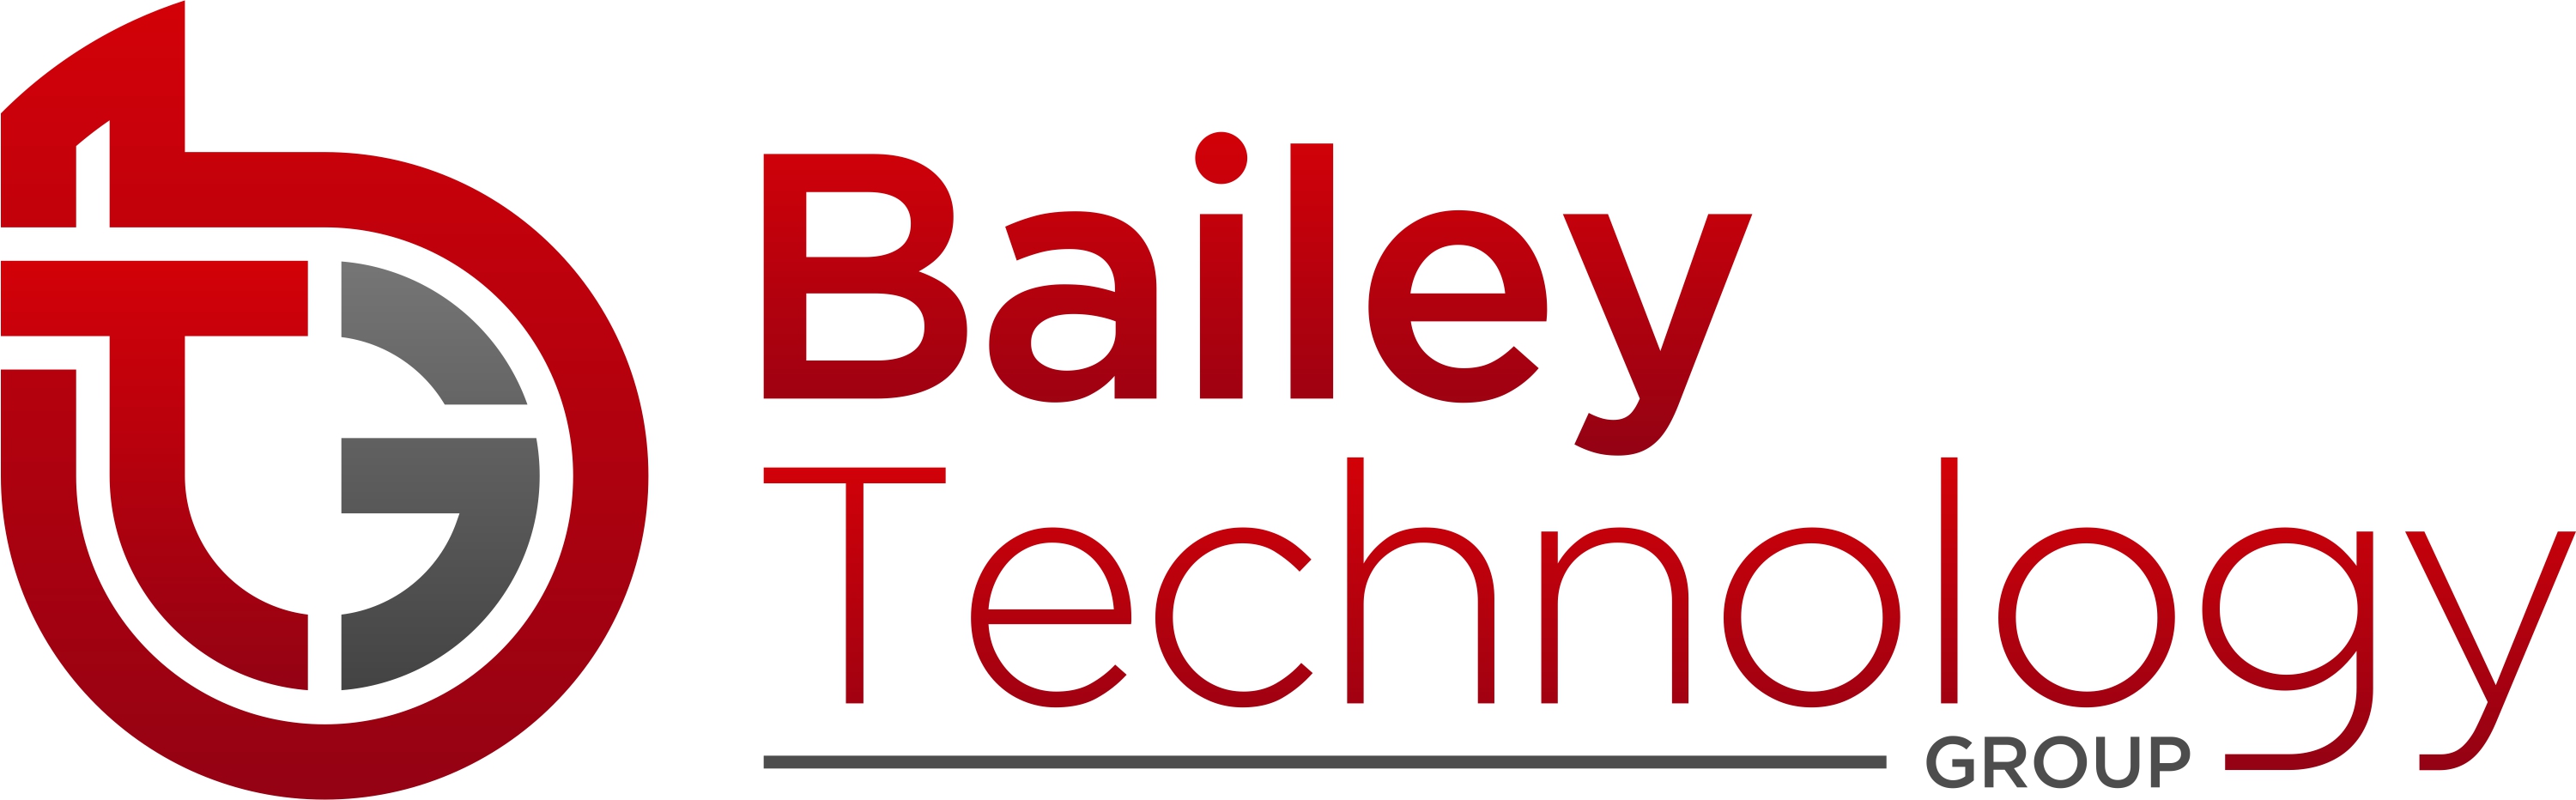 The Bailey Technology Group Logo